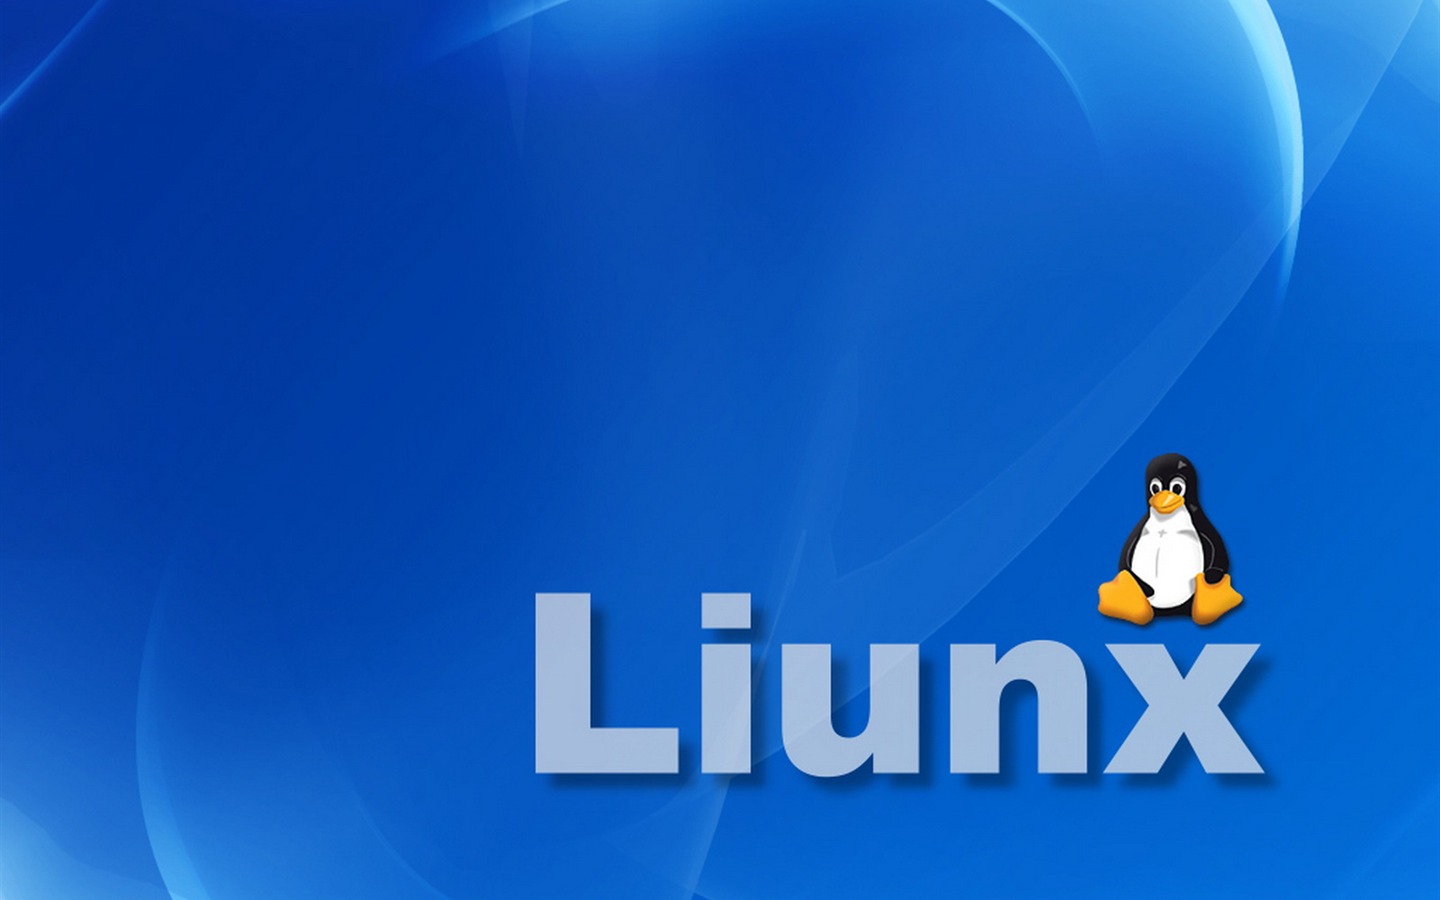 Linux wallpaper (1) #14 - 1440x900